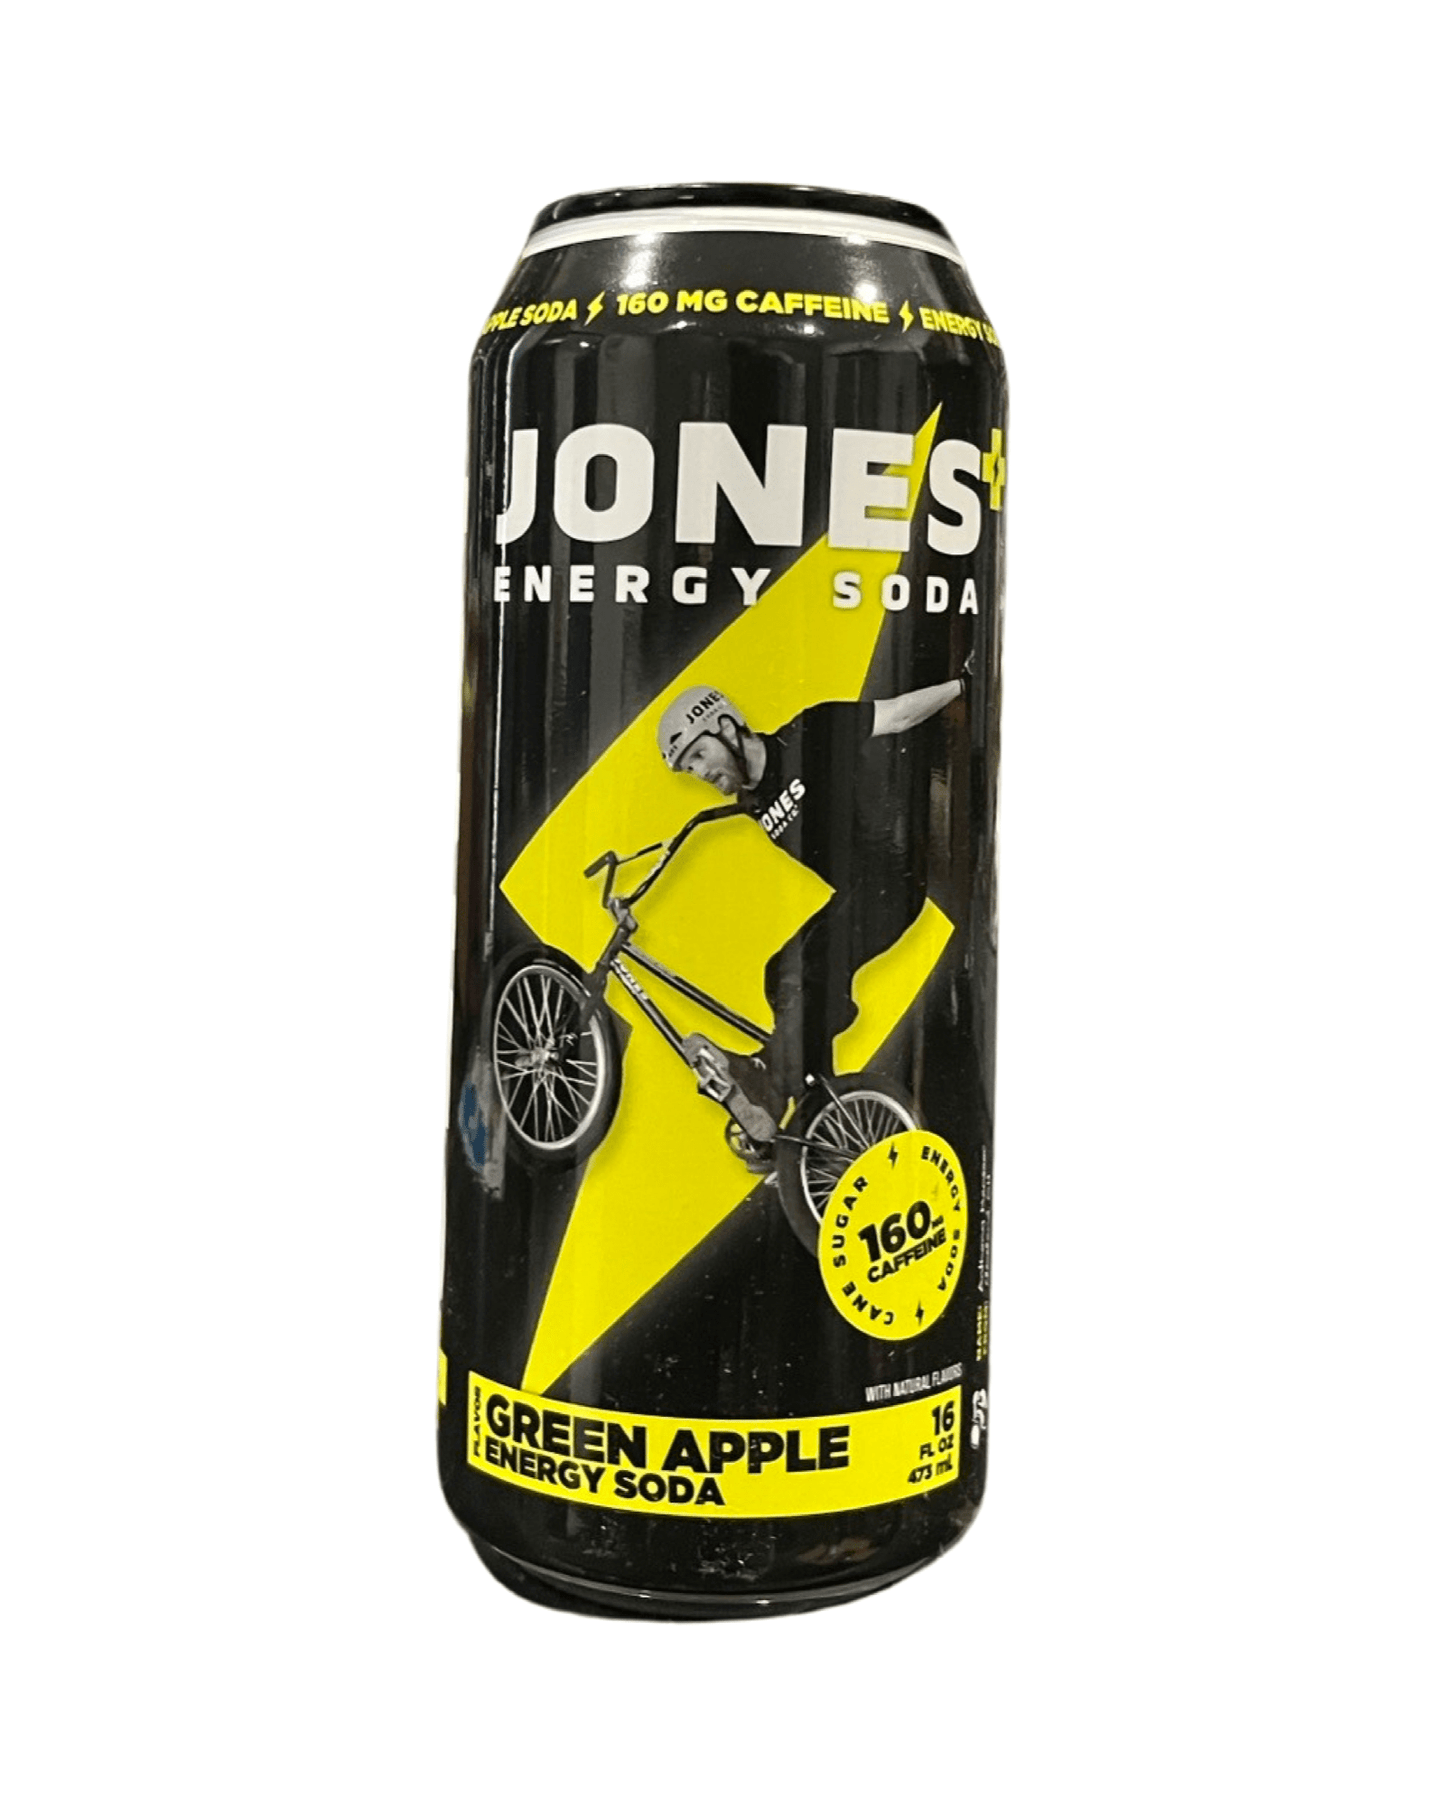 Jones Energy Soda “Green Apple” (Rare American) - Exotic Soda Company